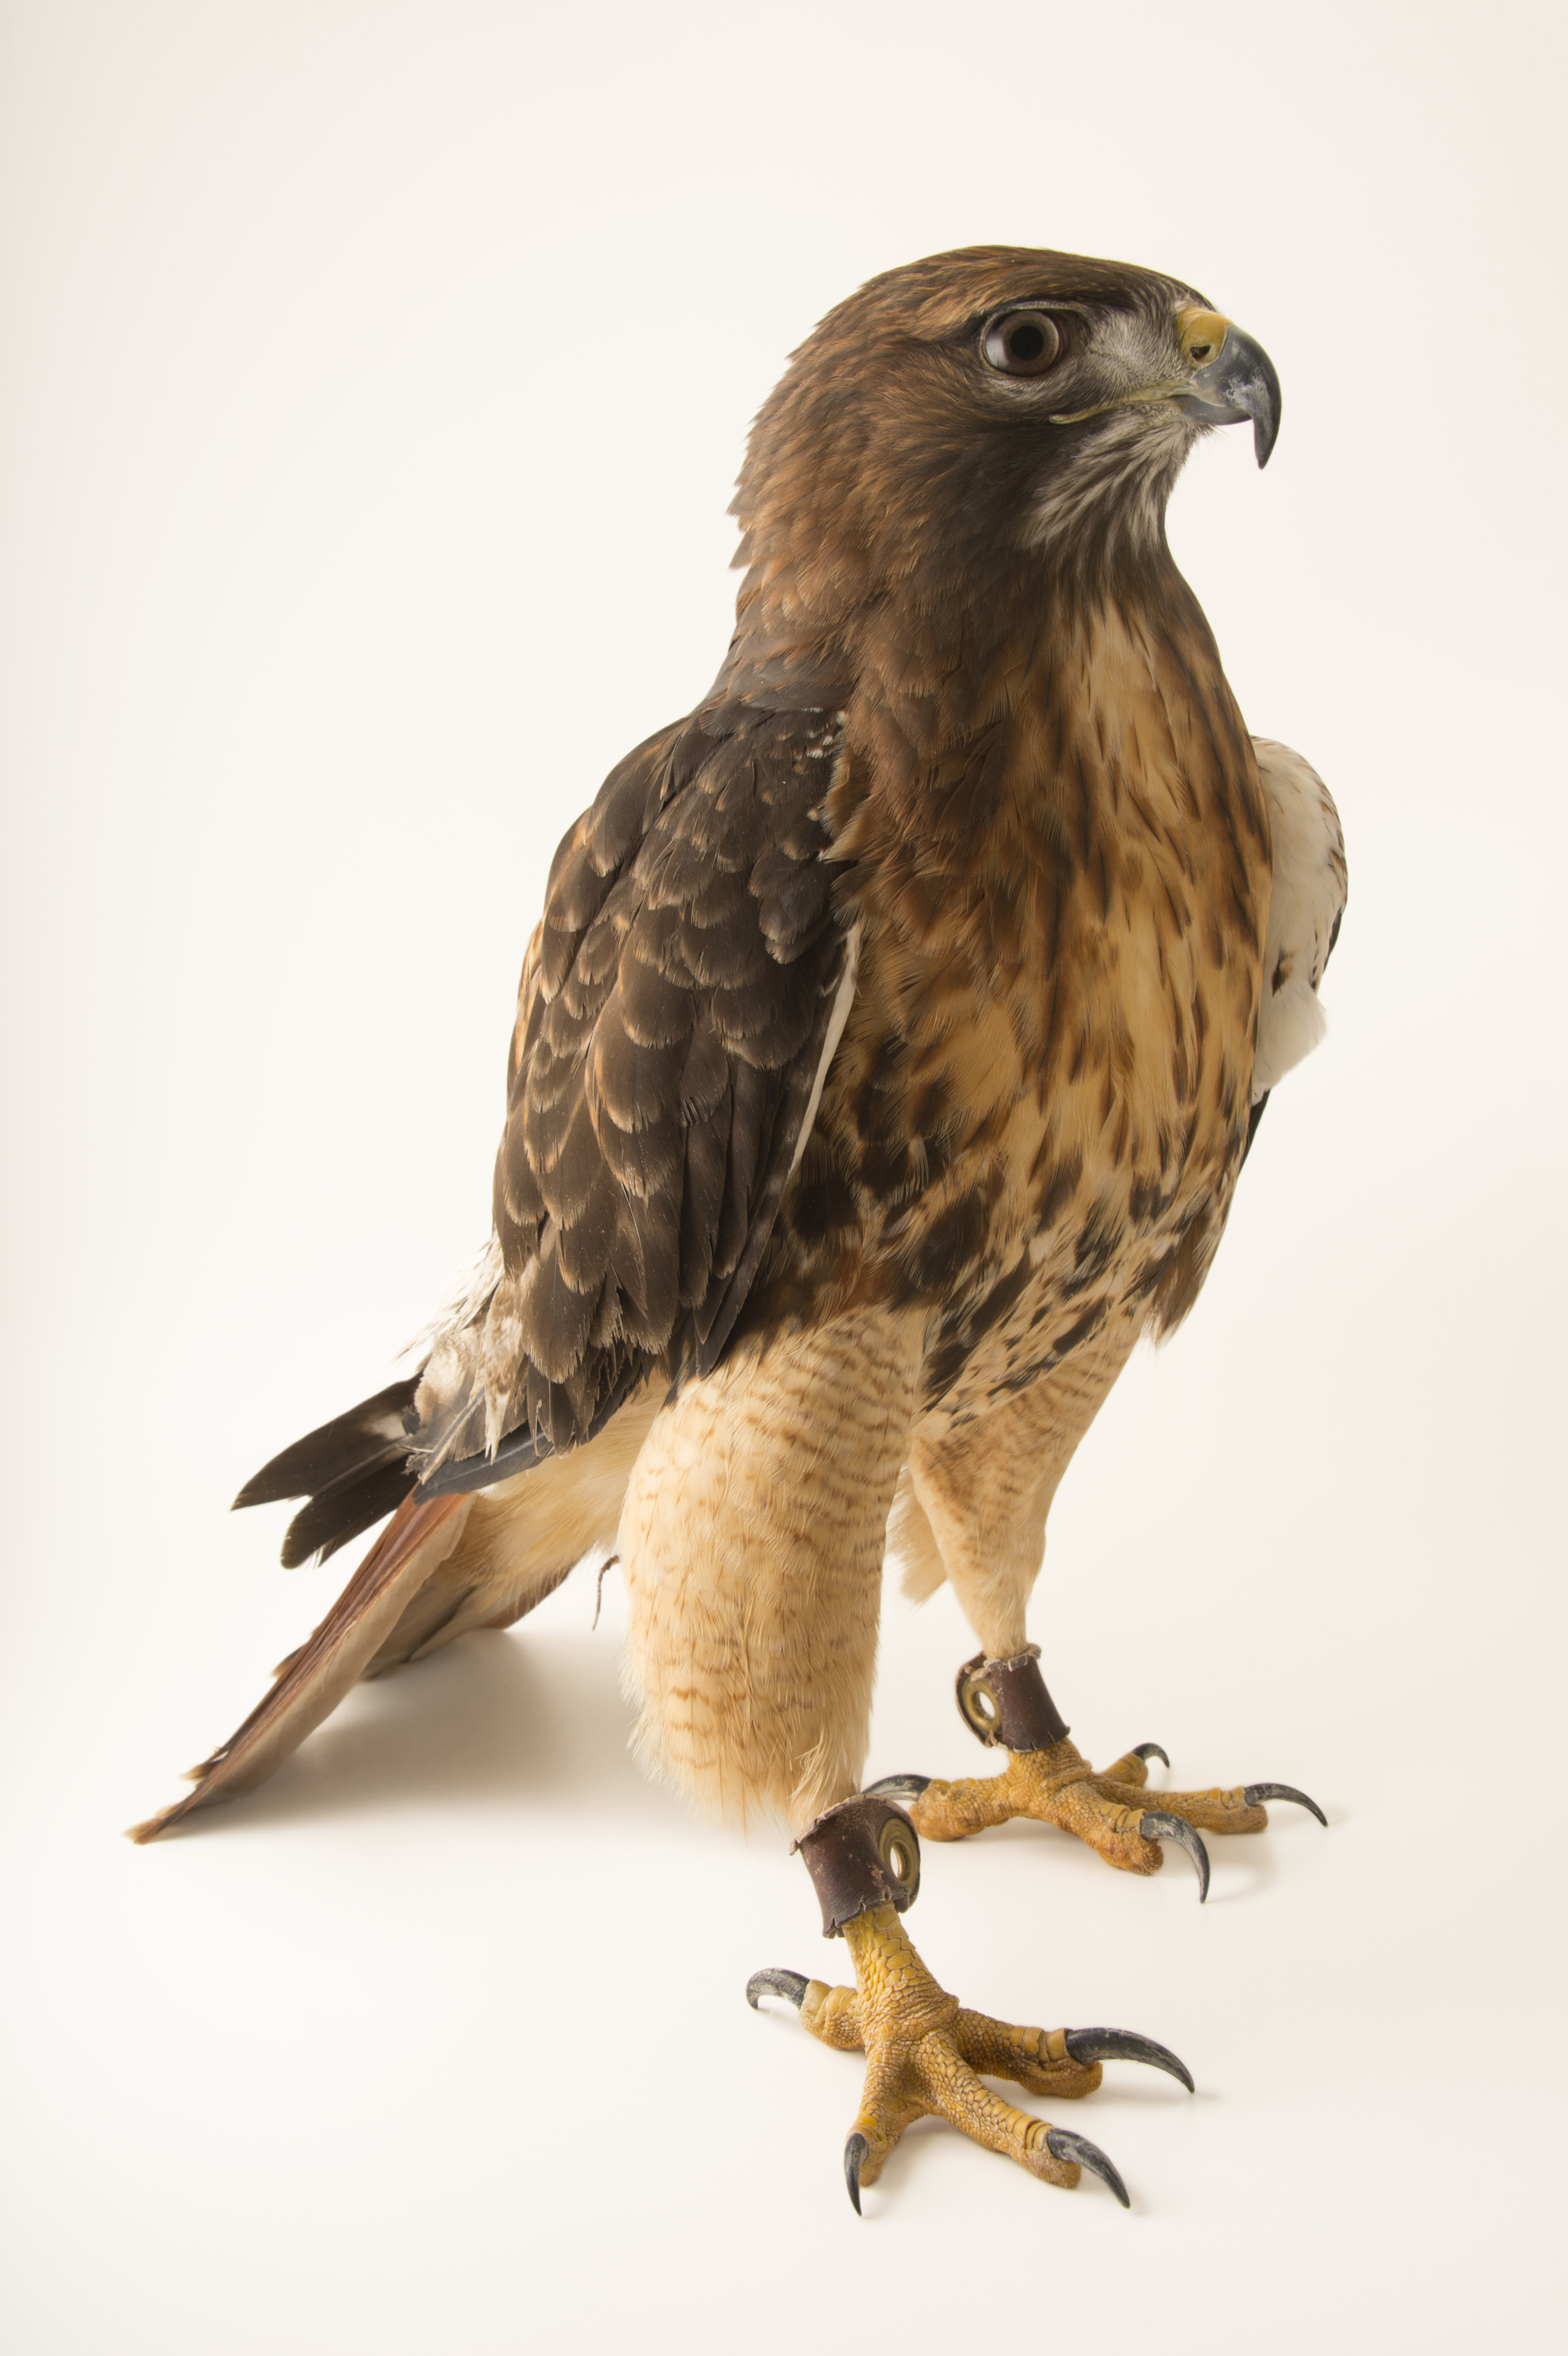 Red-tailed hawk images - Joel Sartore